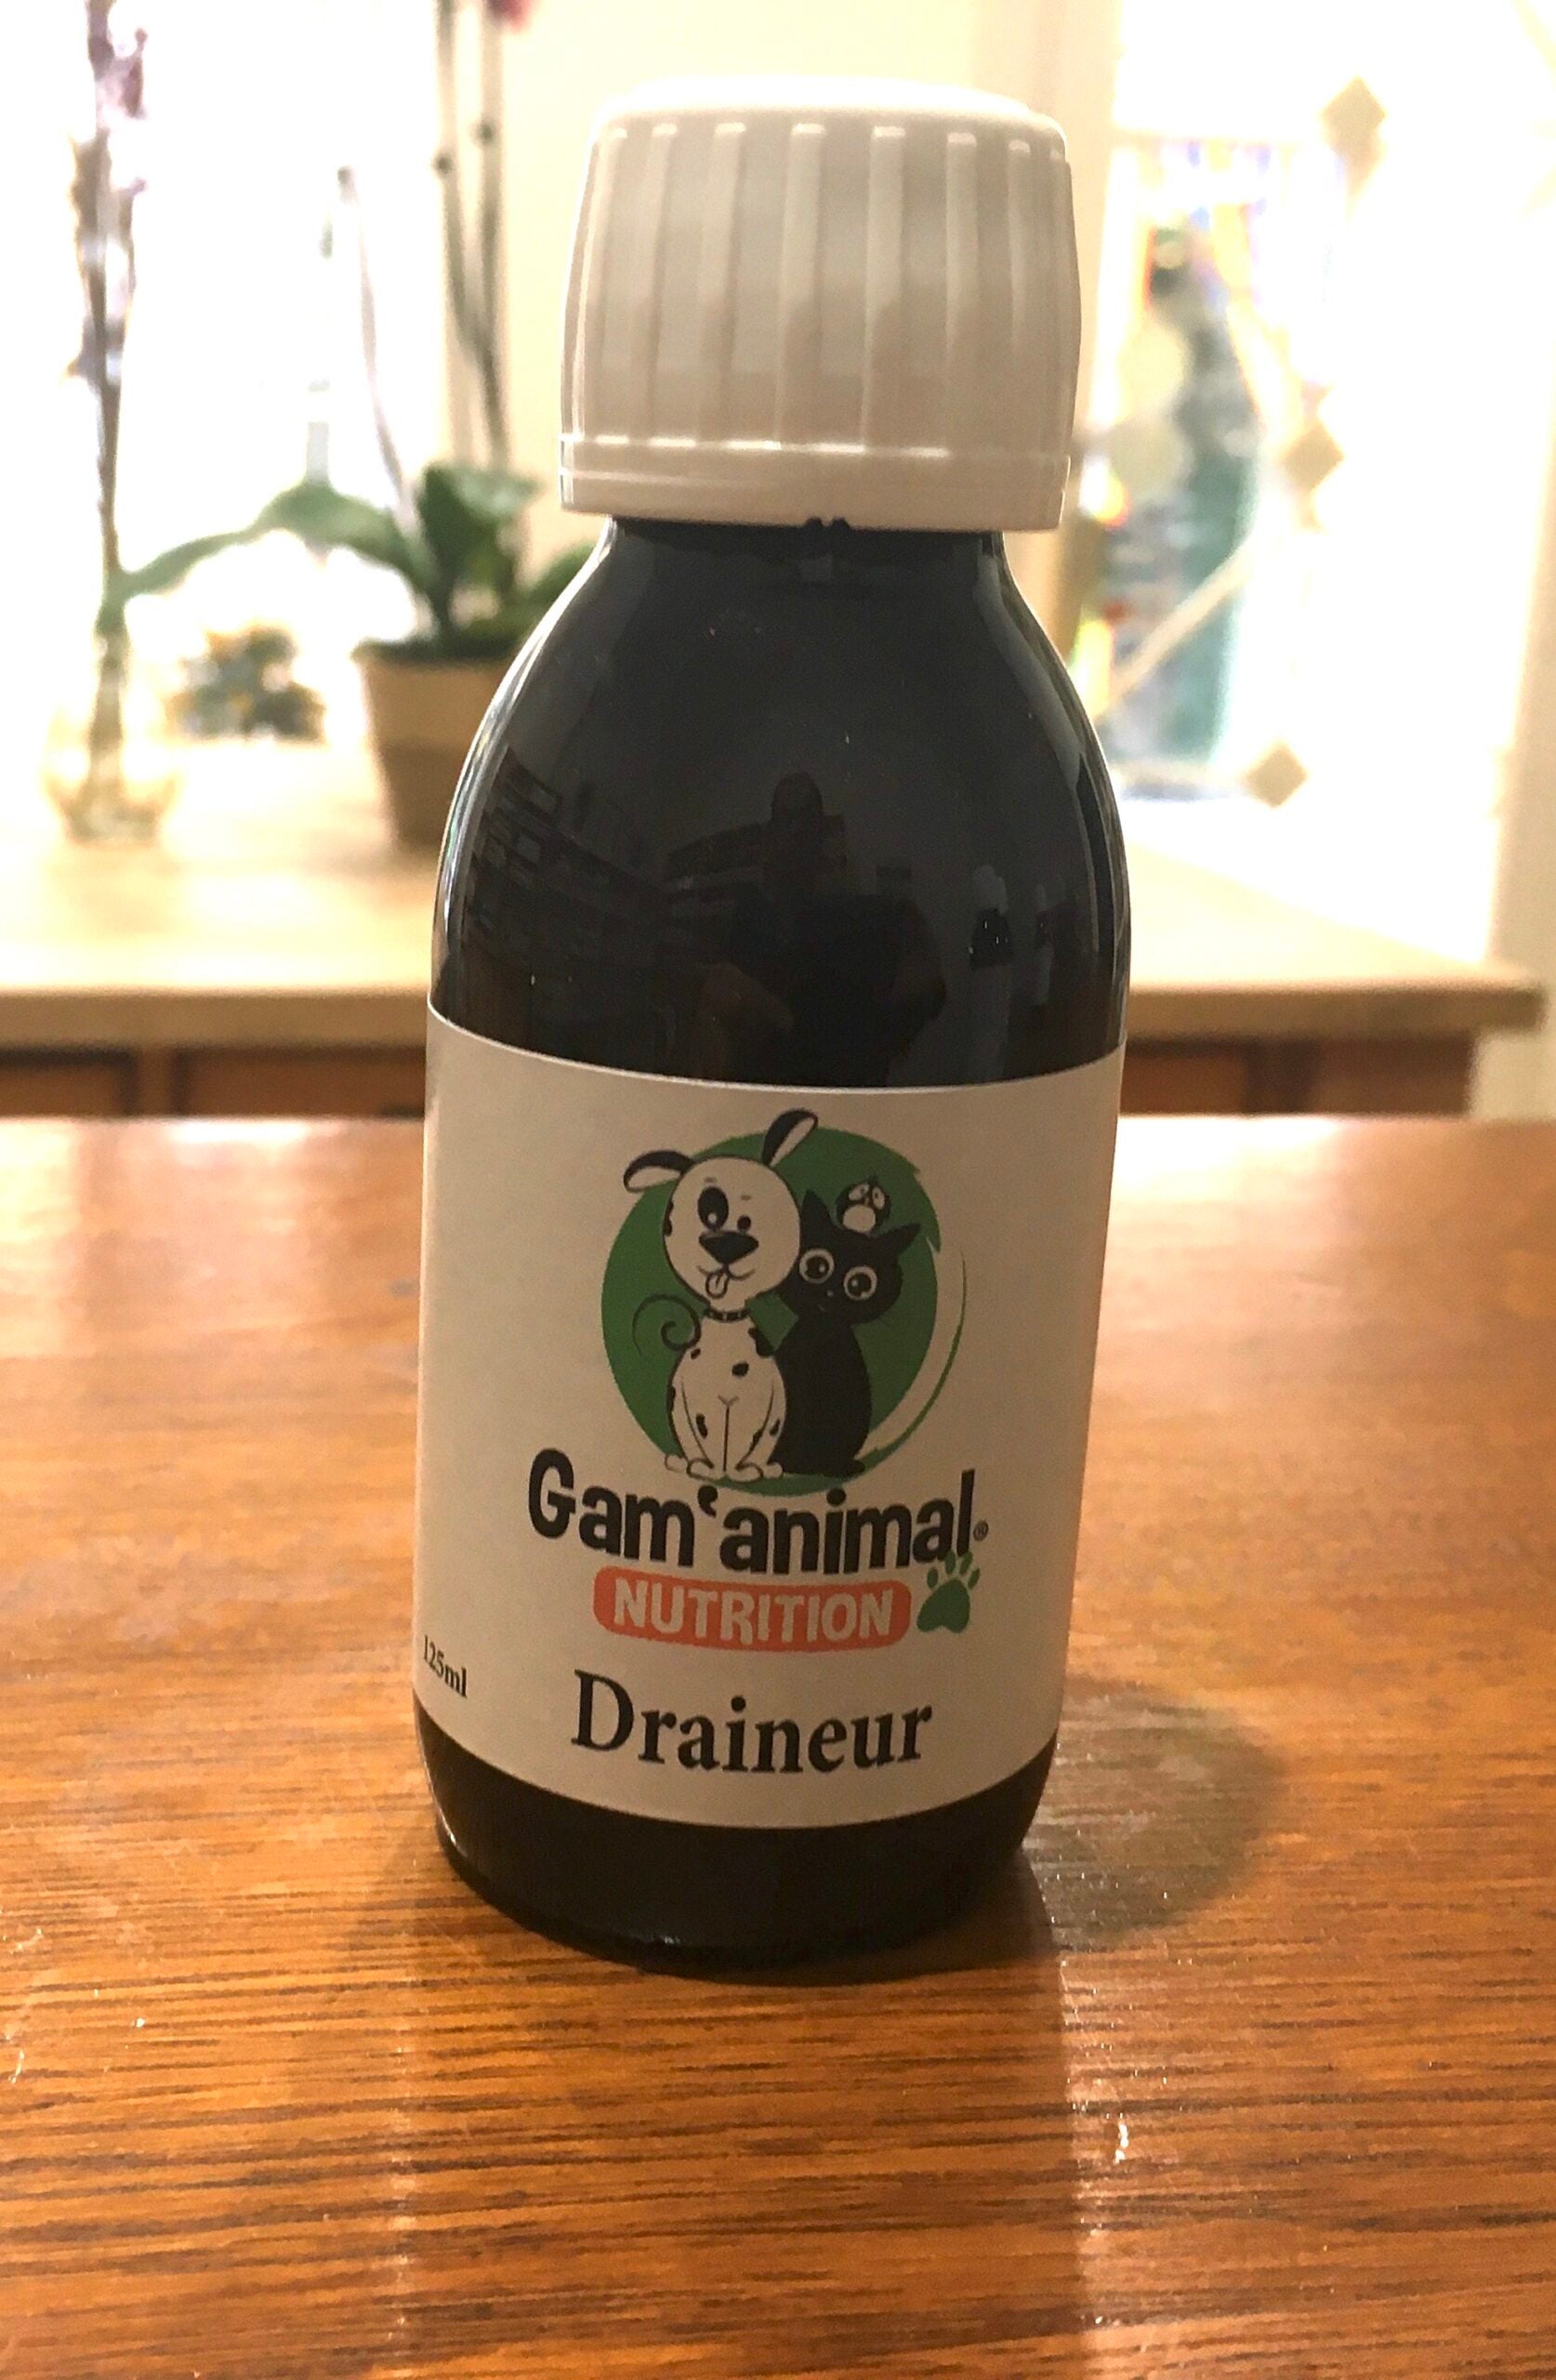 Gam’animal Nutrition - Draineur